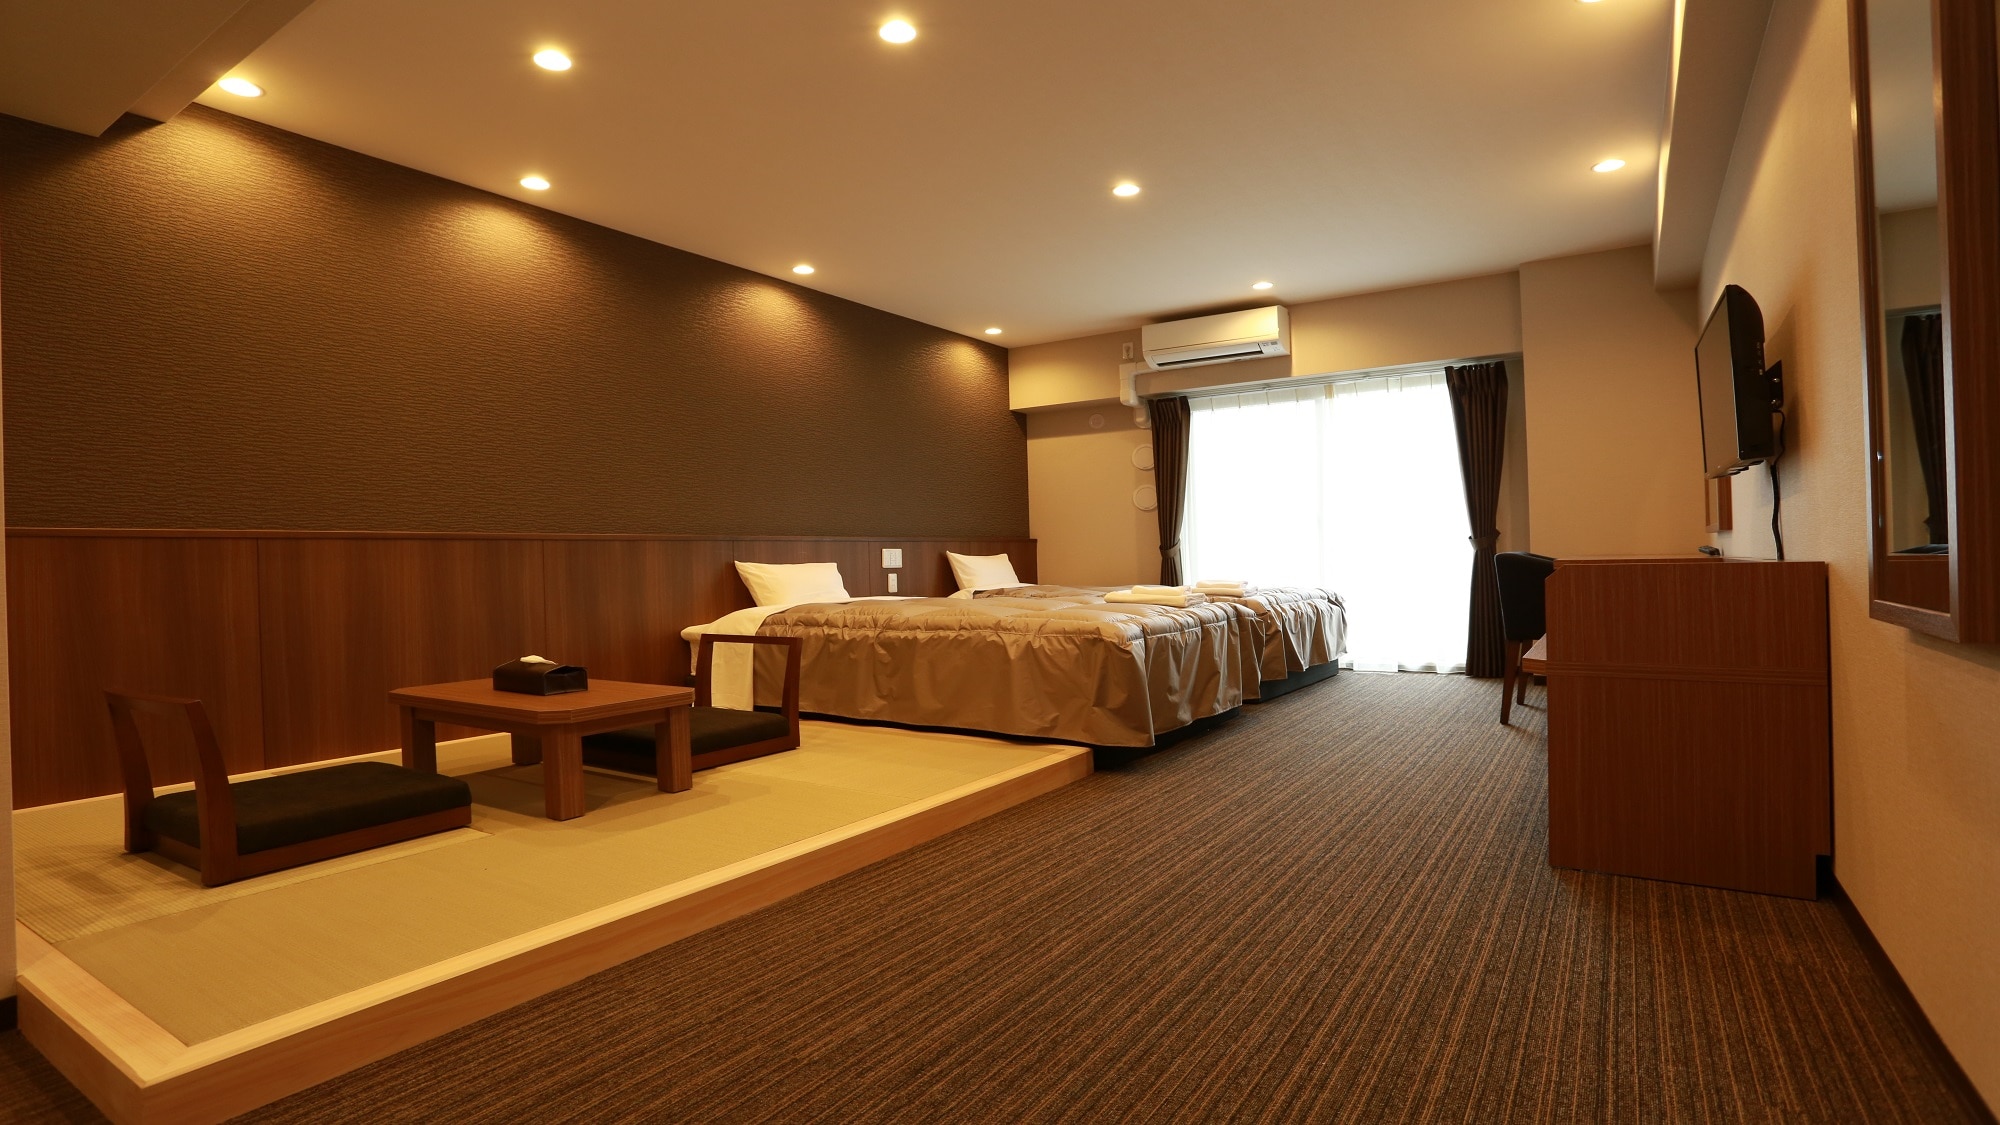 Kamar Jepang dan Barat Lebar 120 cm 2 tempat tidur + ruang tatami